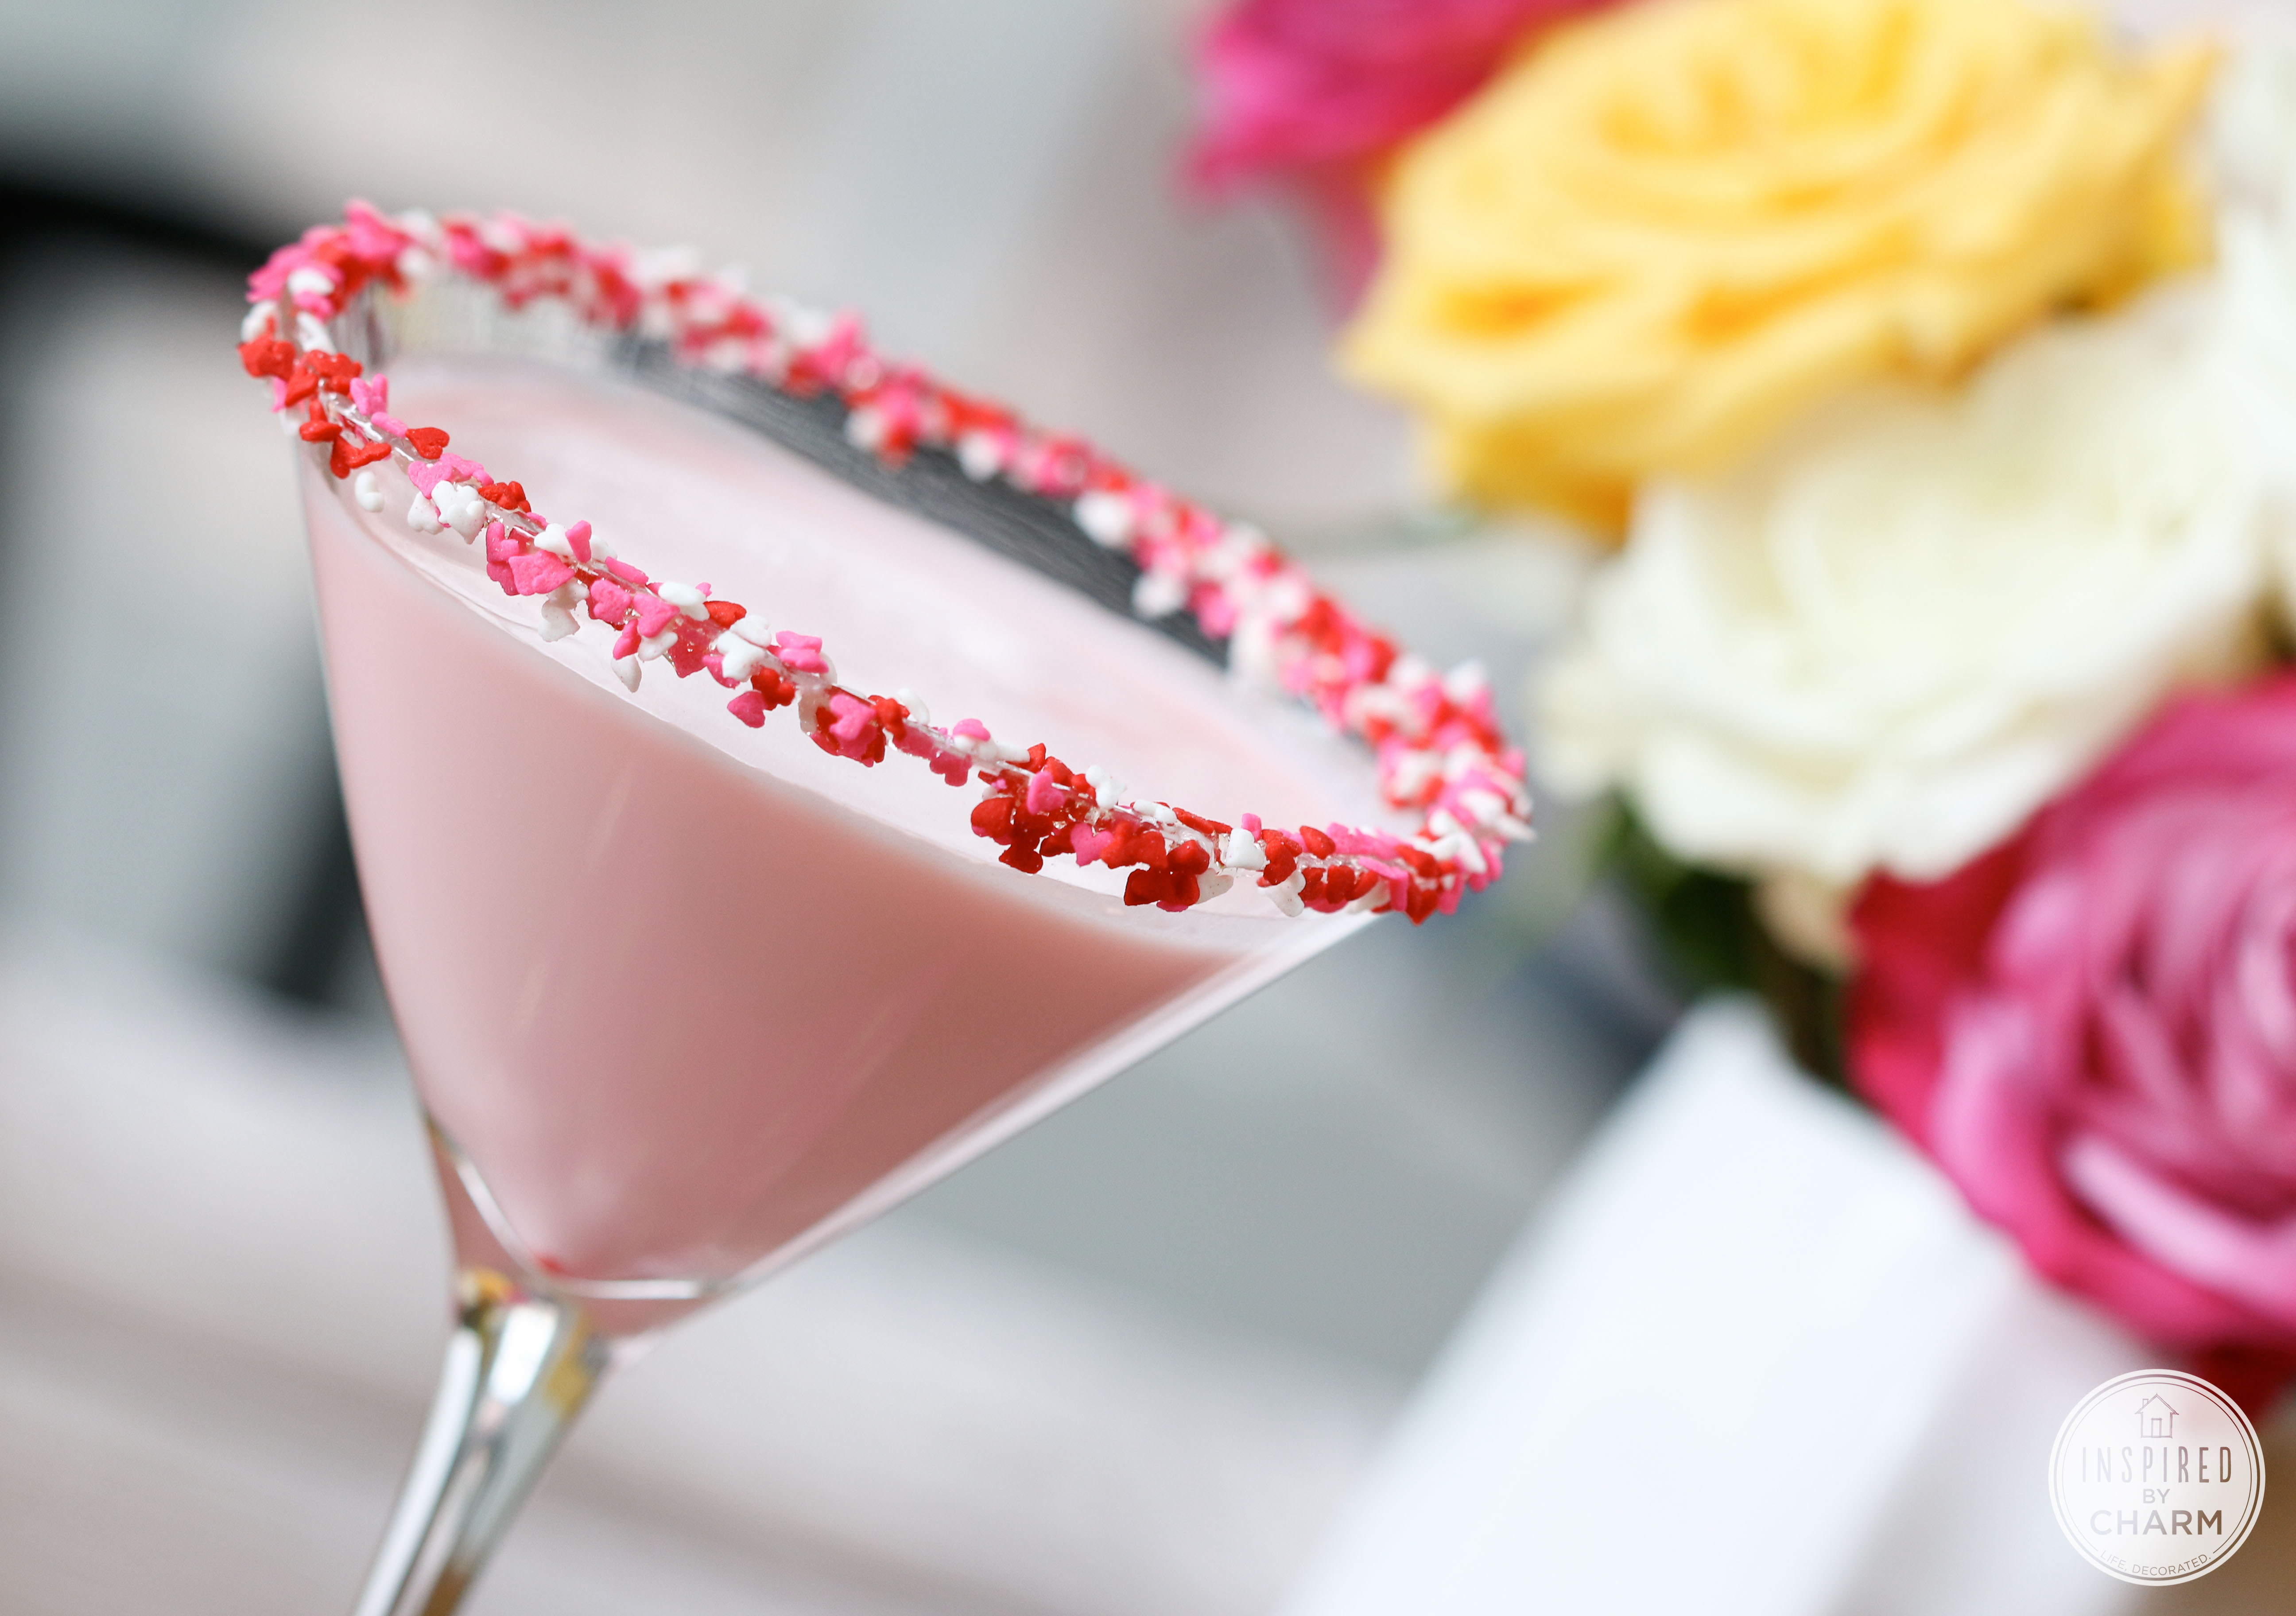 Sweetie Martini Valentine’s Day Cocktail